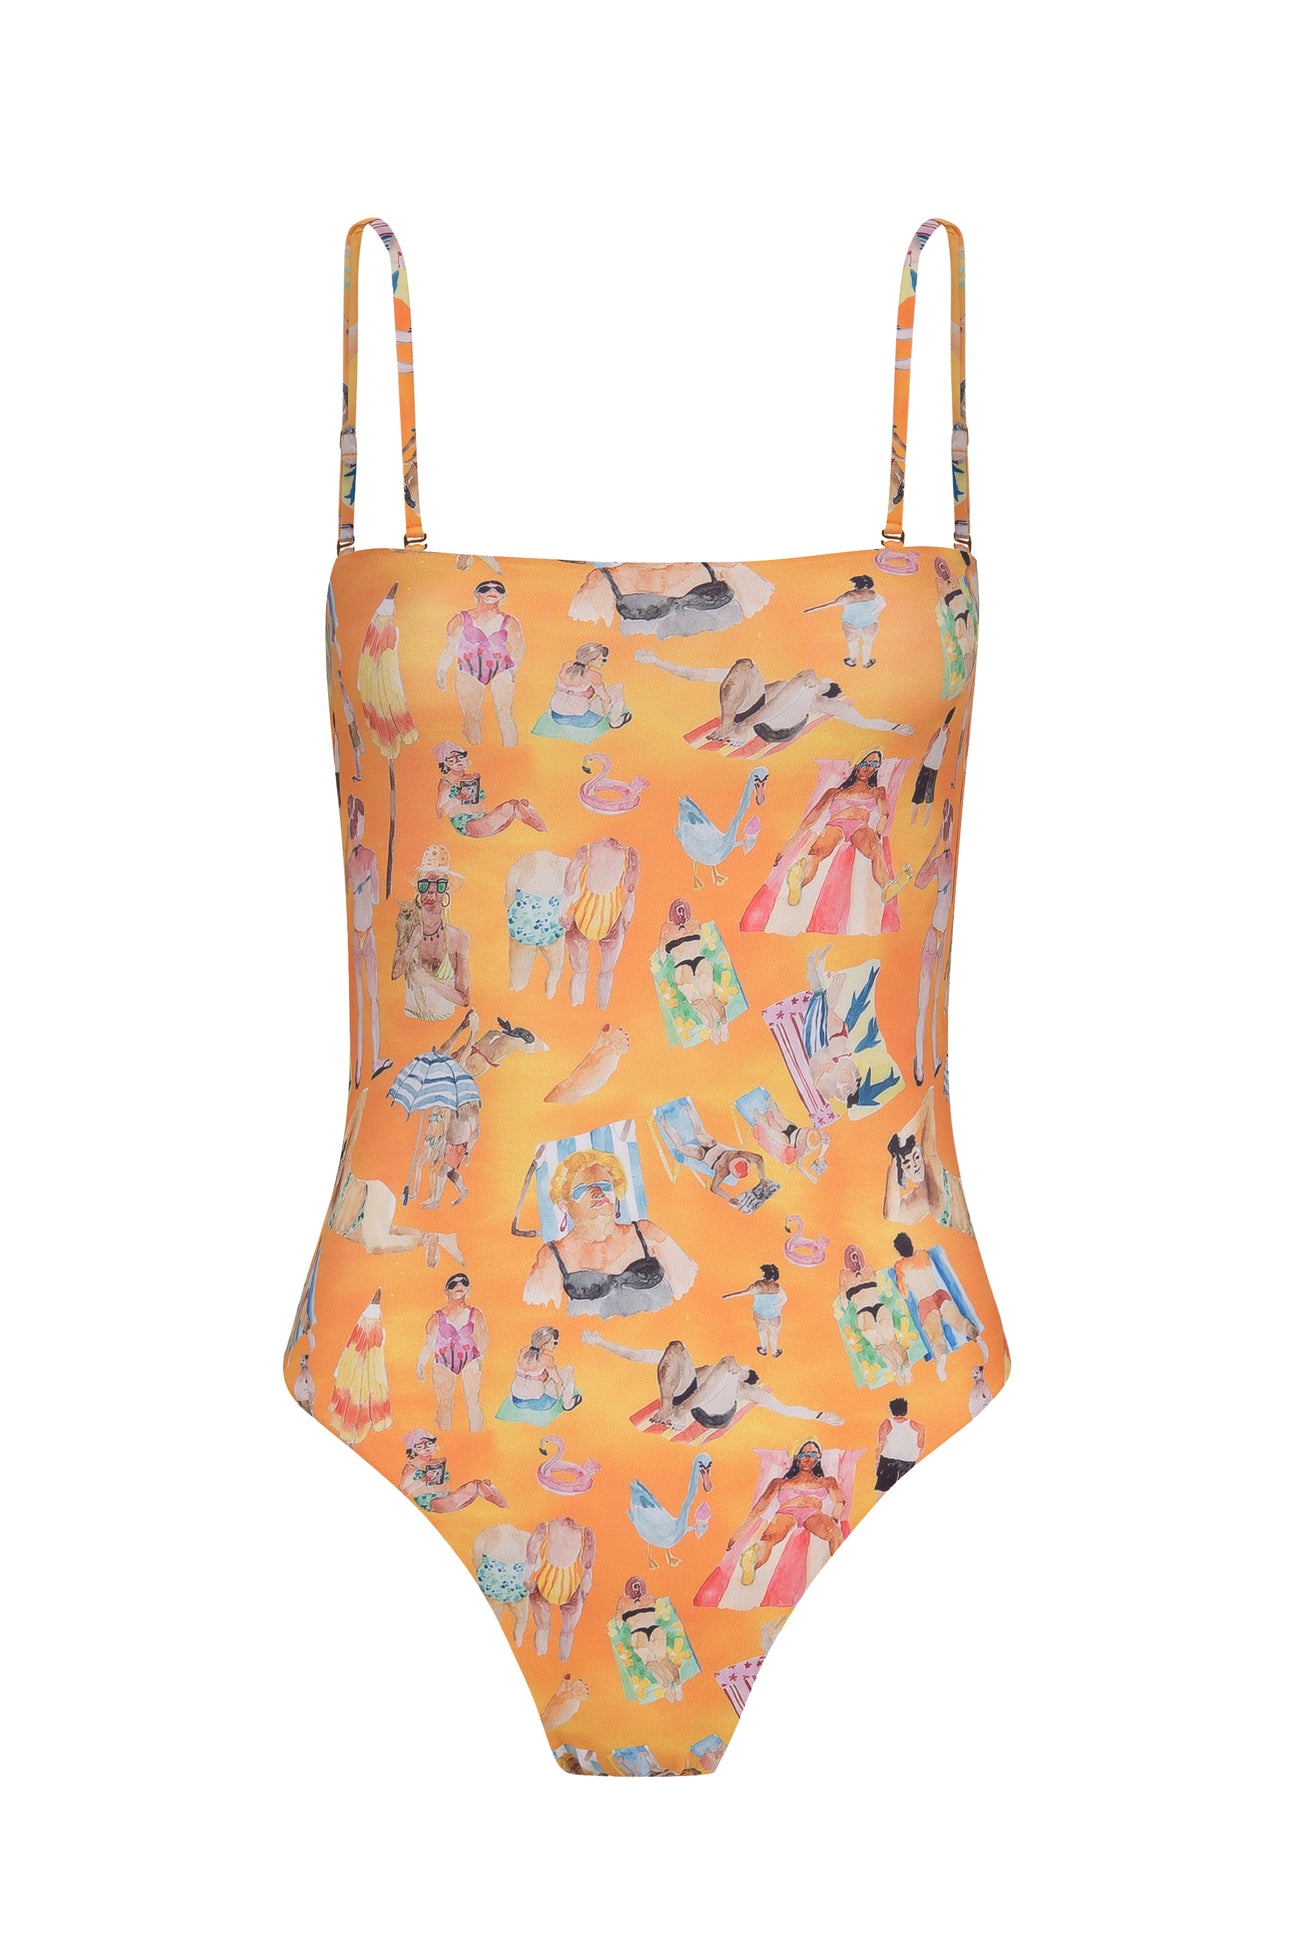 Giro Orange Strapless Swimsuit